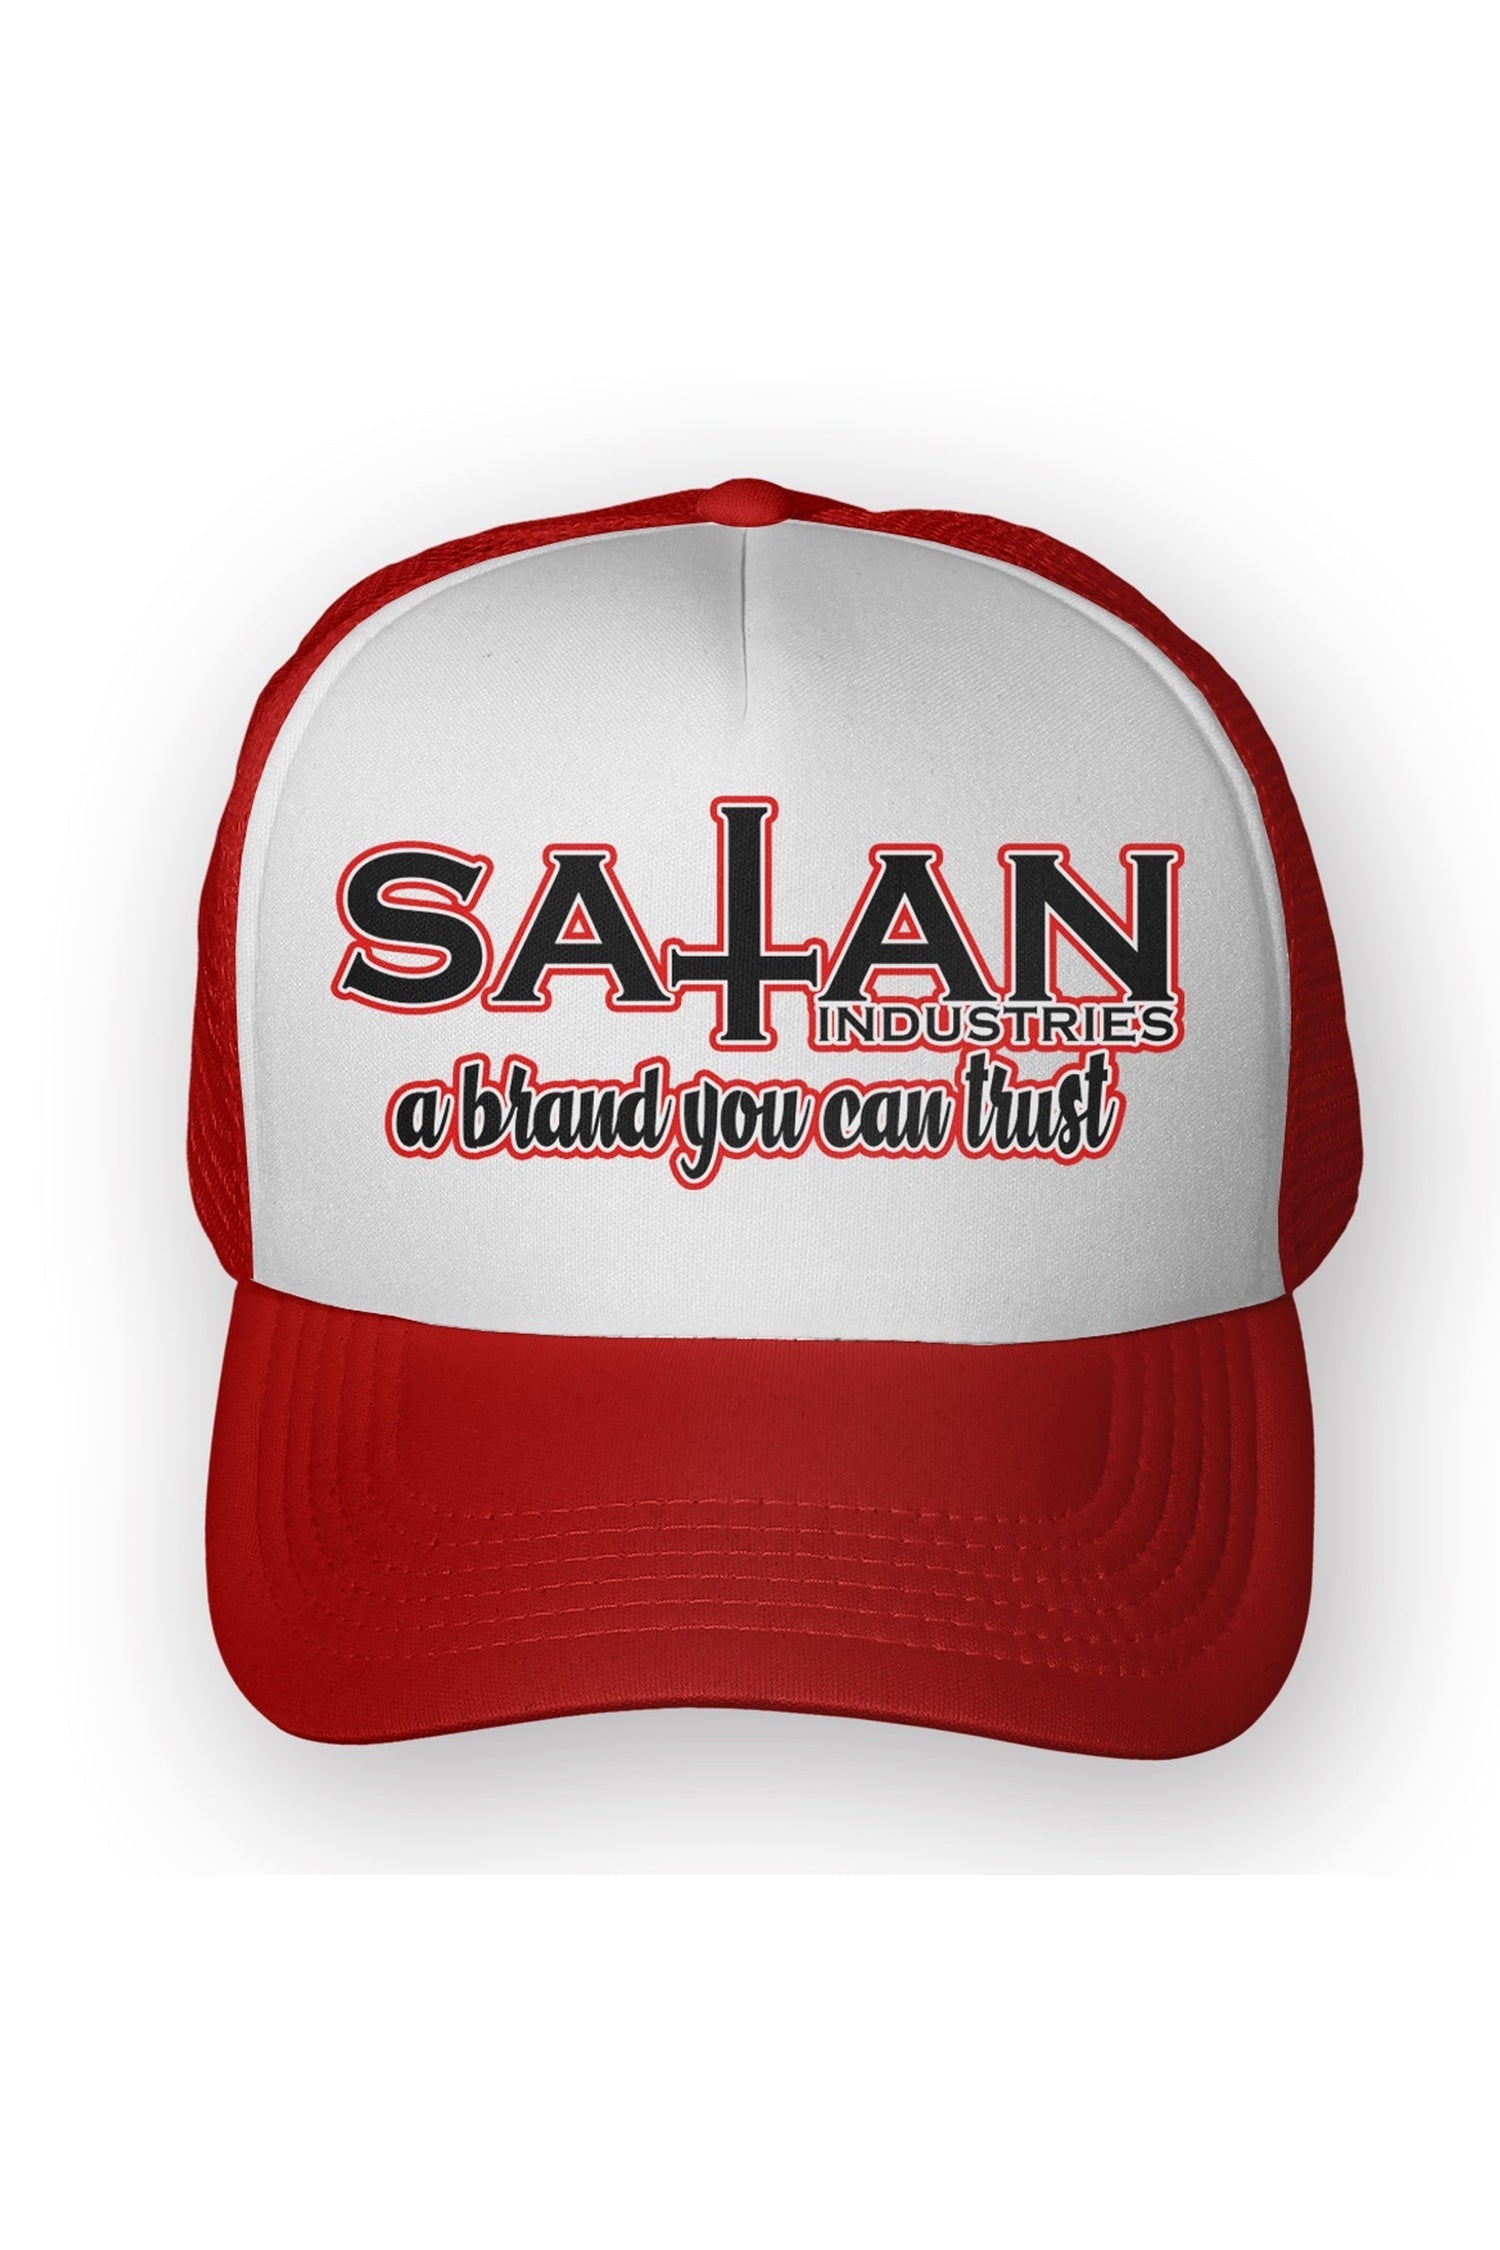 Satan Brand Trucker Hat-Toxico-Dark Fashion Clothing